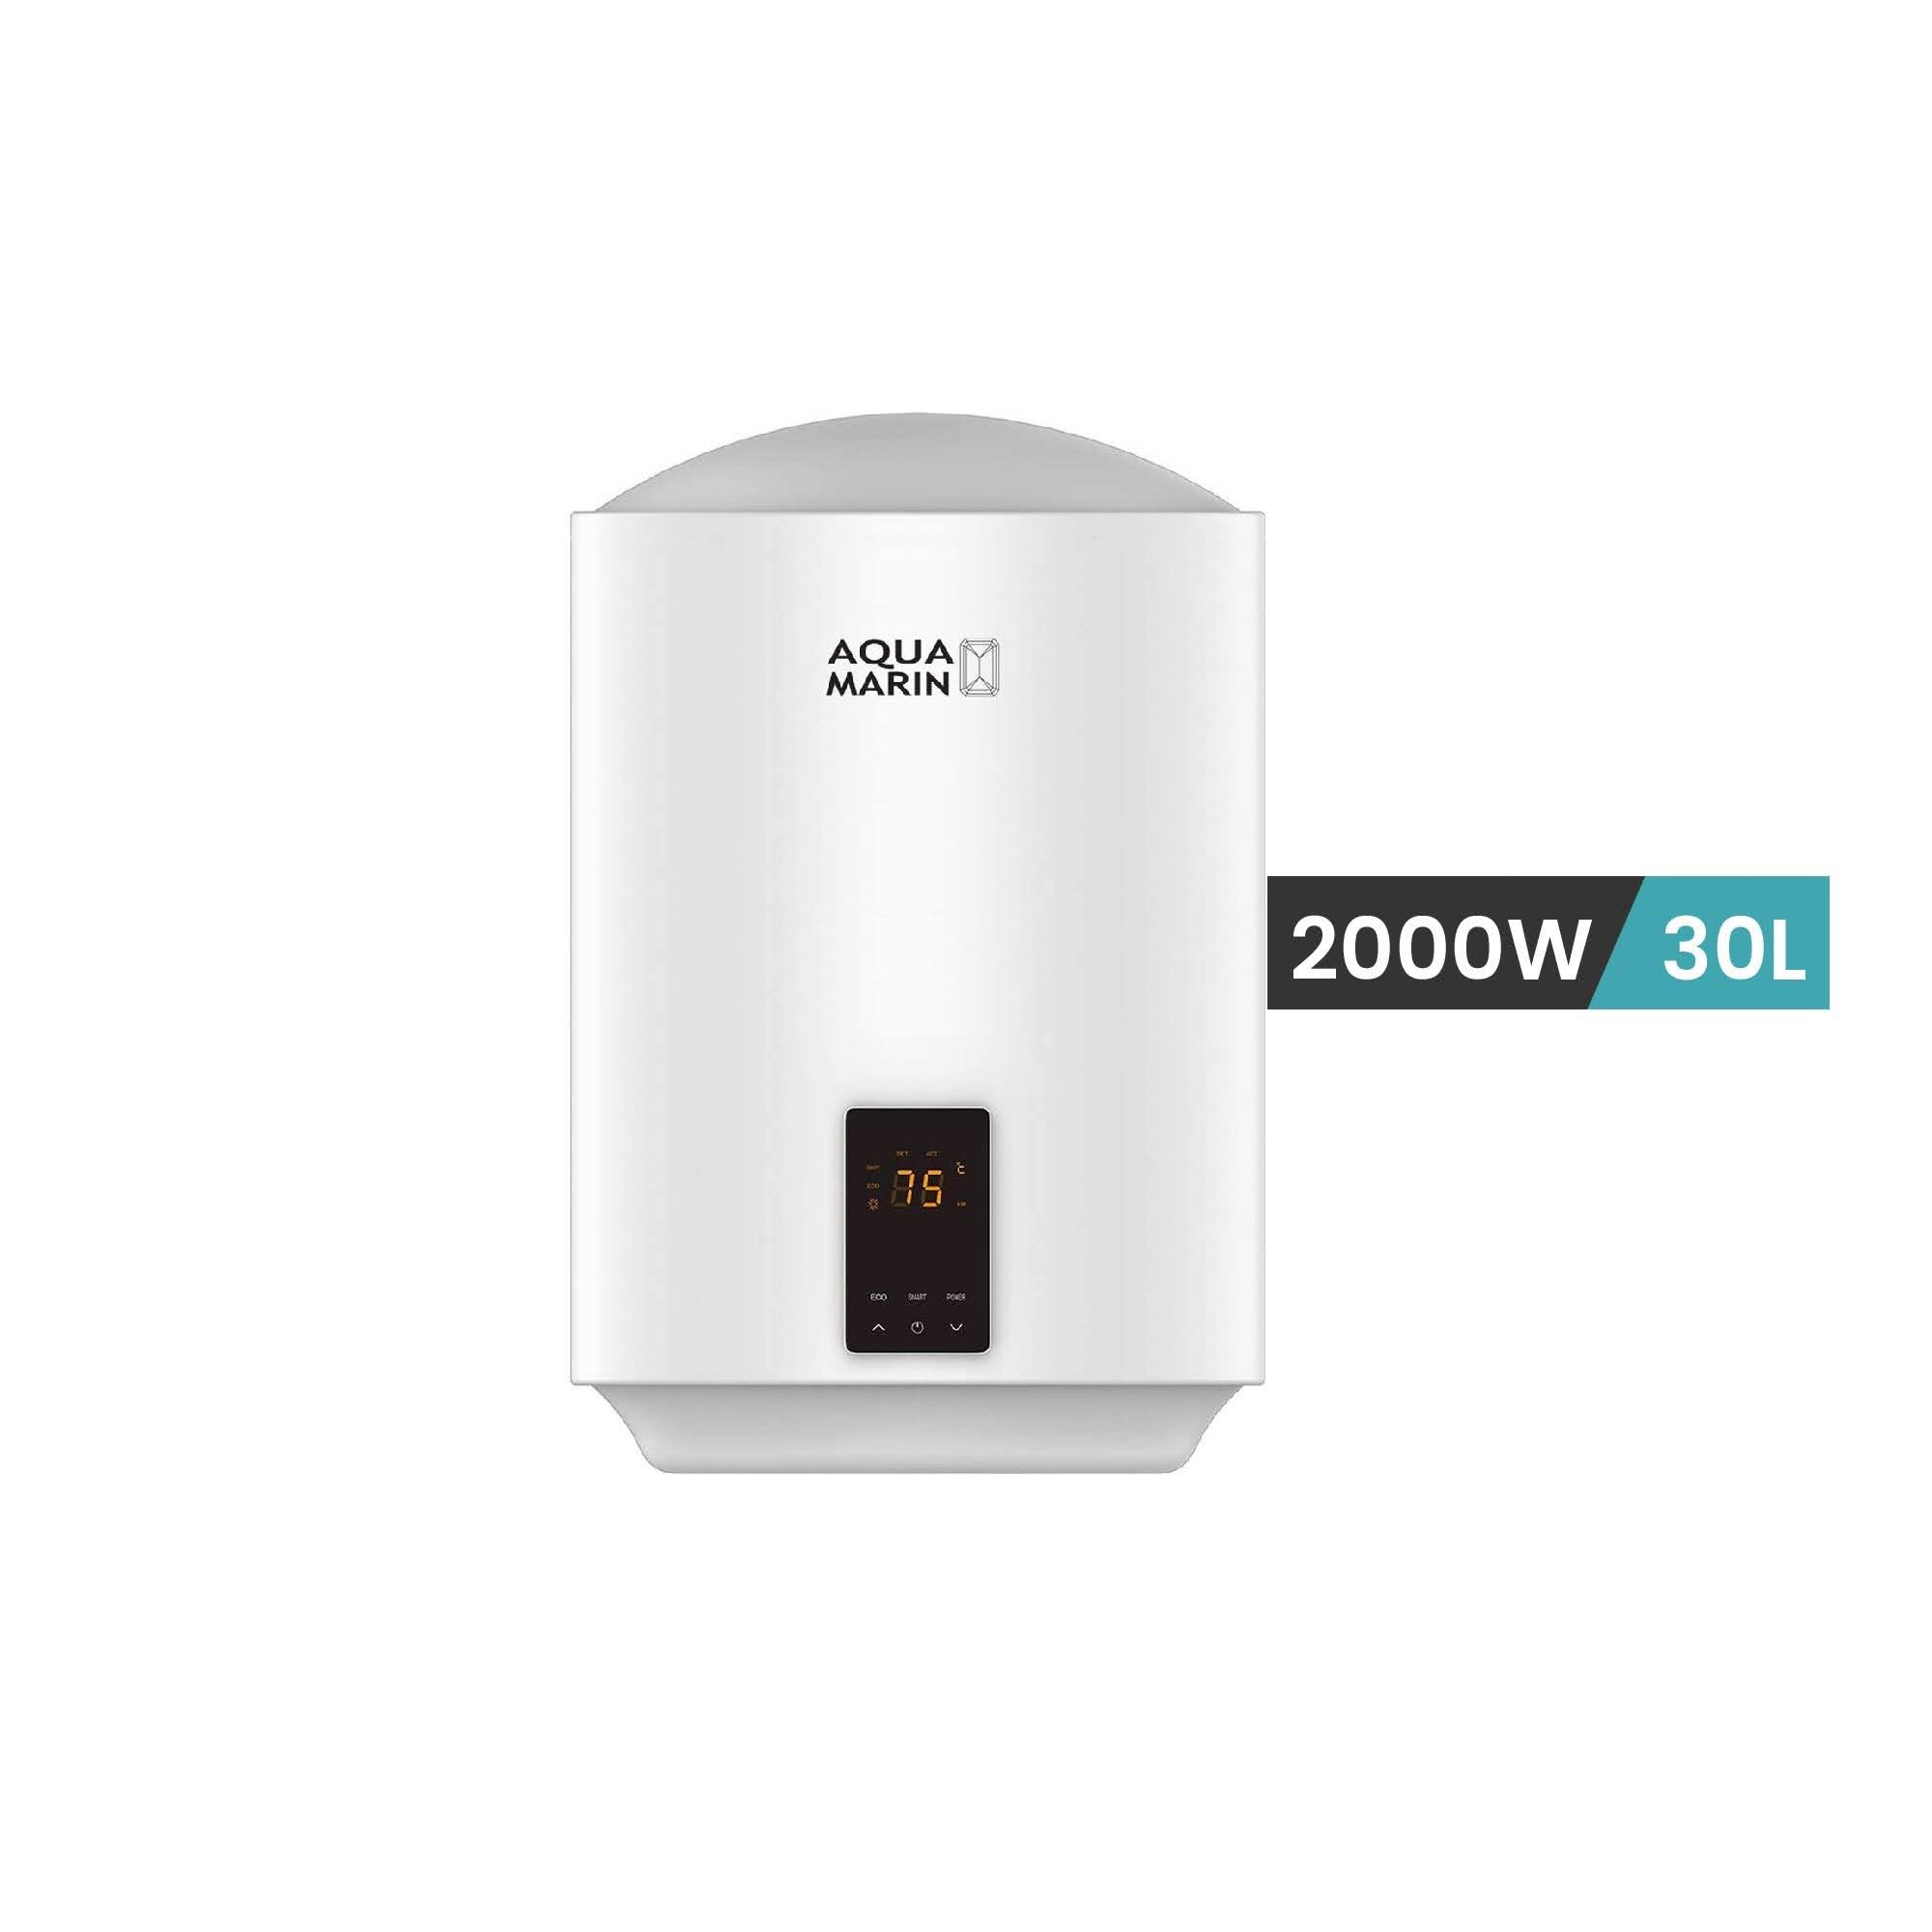 Aquamarin smart boiler – 30 liter – 2000W